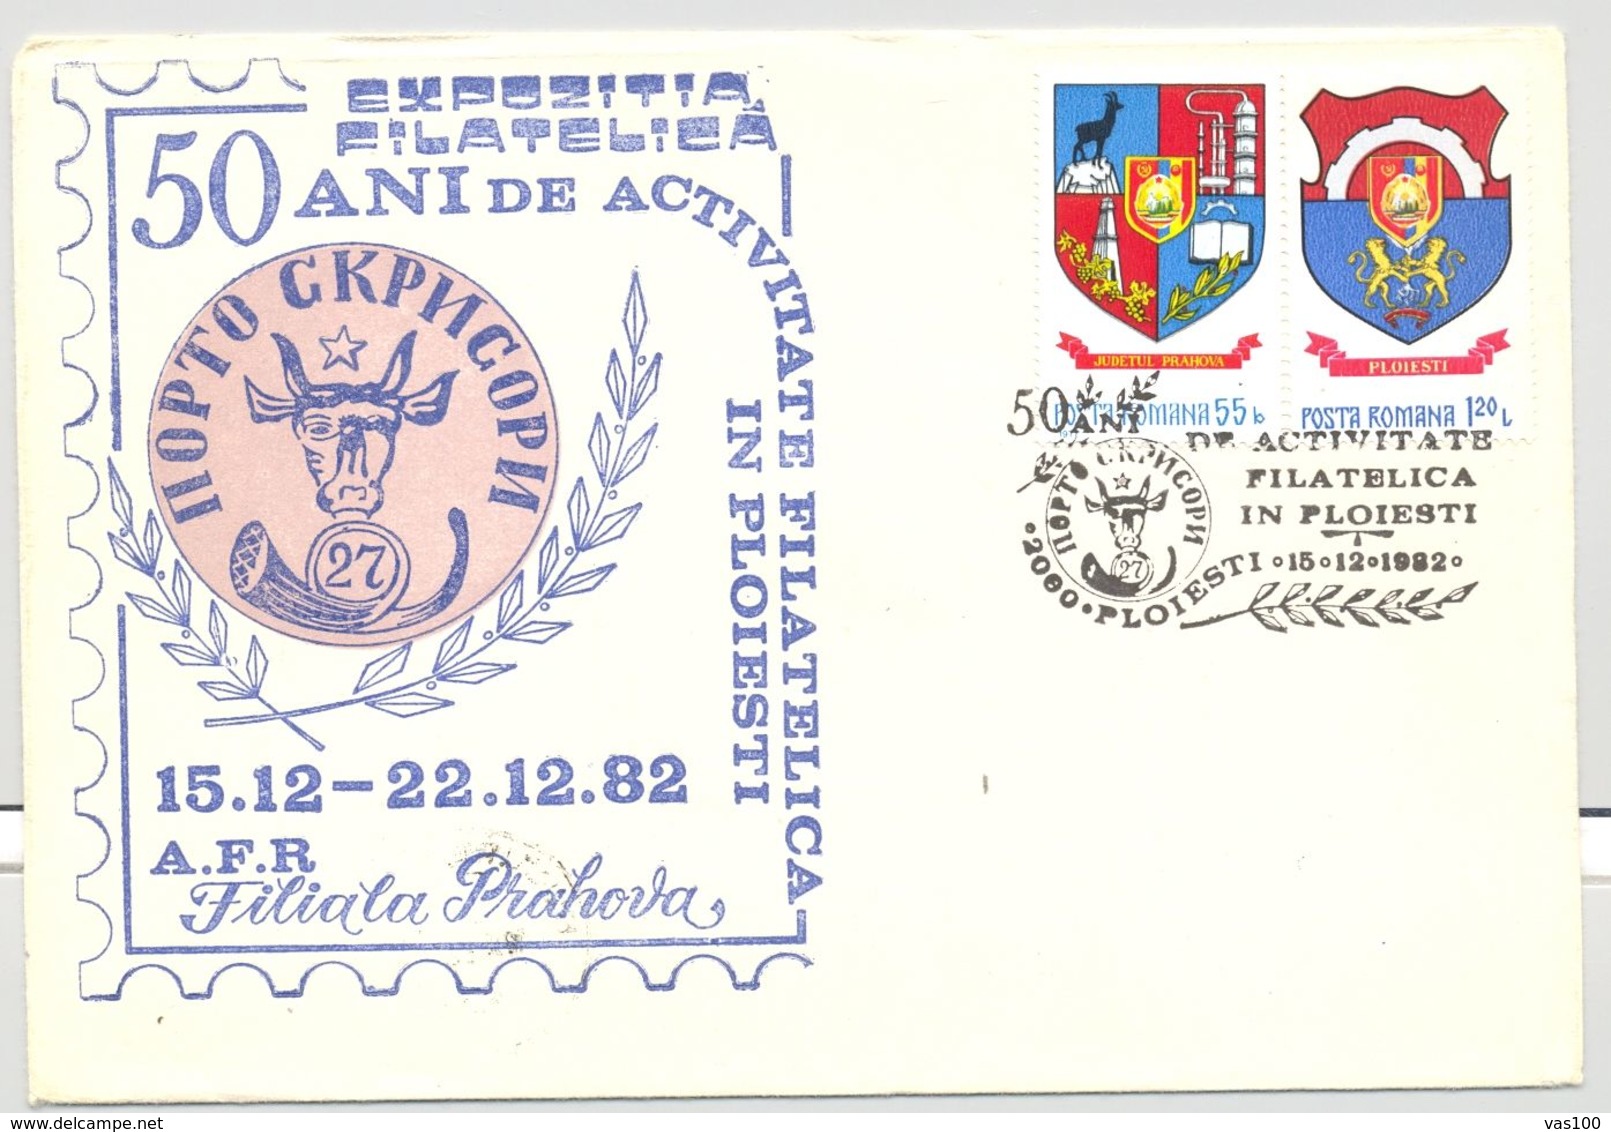 PLOIESTI PHILATELIC CLUB ANNIVERSARY, COAT OF ARMS STAMPS, SPECIAL COVER, 1982, ROMANIA - Briefe U. Dokumente